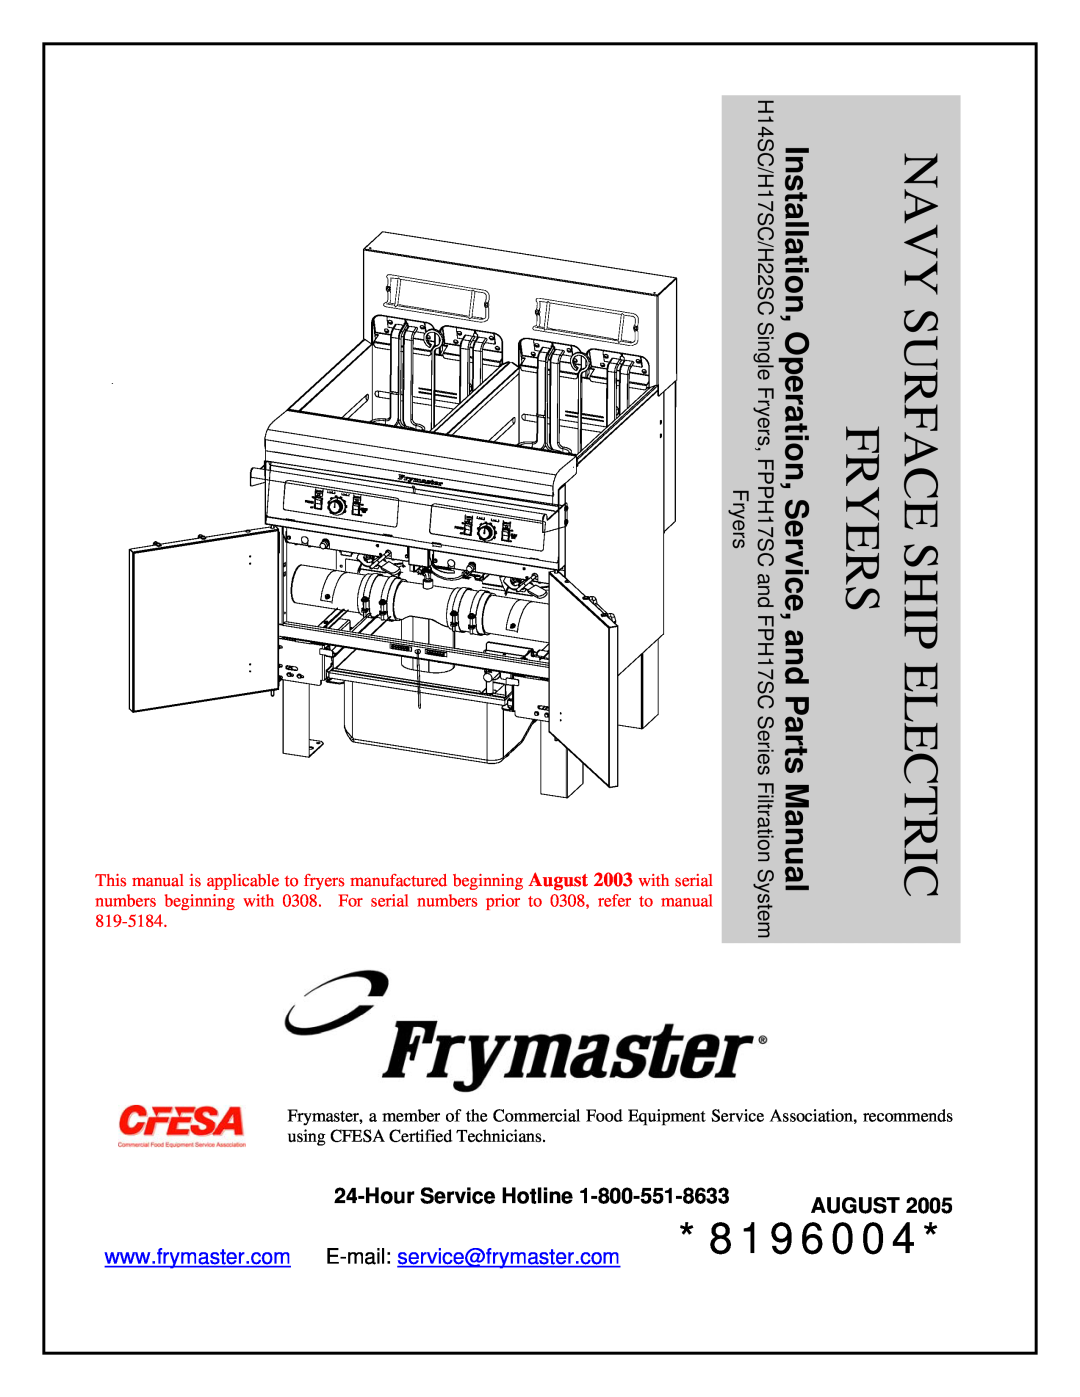 Frymaster H22SC, H17SC, H14SC manual Hour Service Hotline, Fryers, 8196004, Shipnavysurfaceelectric, 819-5184, August 